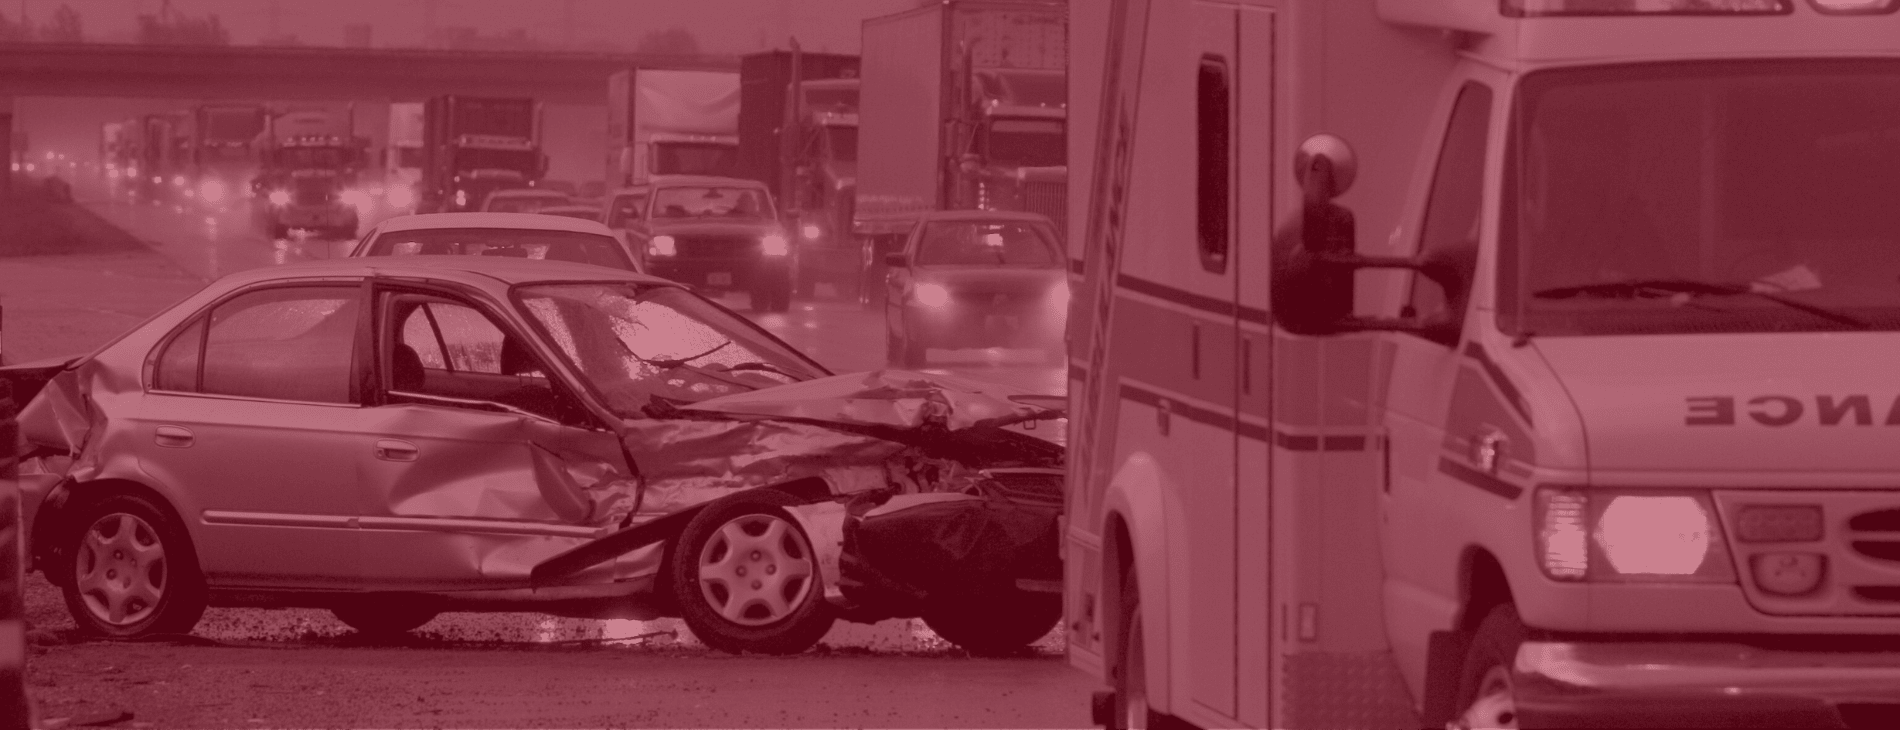 Northern Sacramento car crash